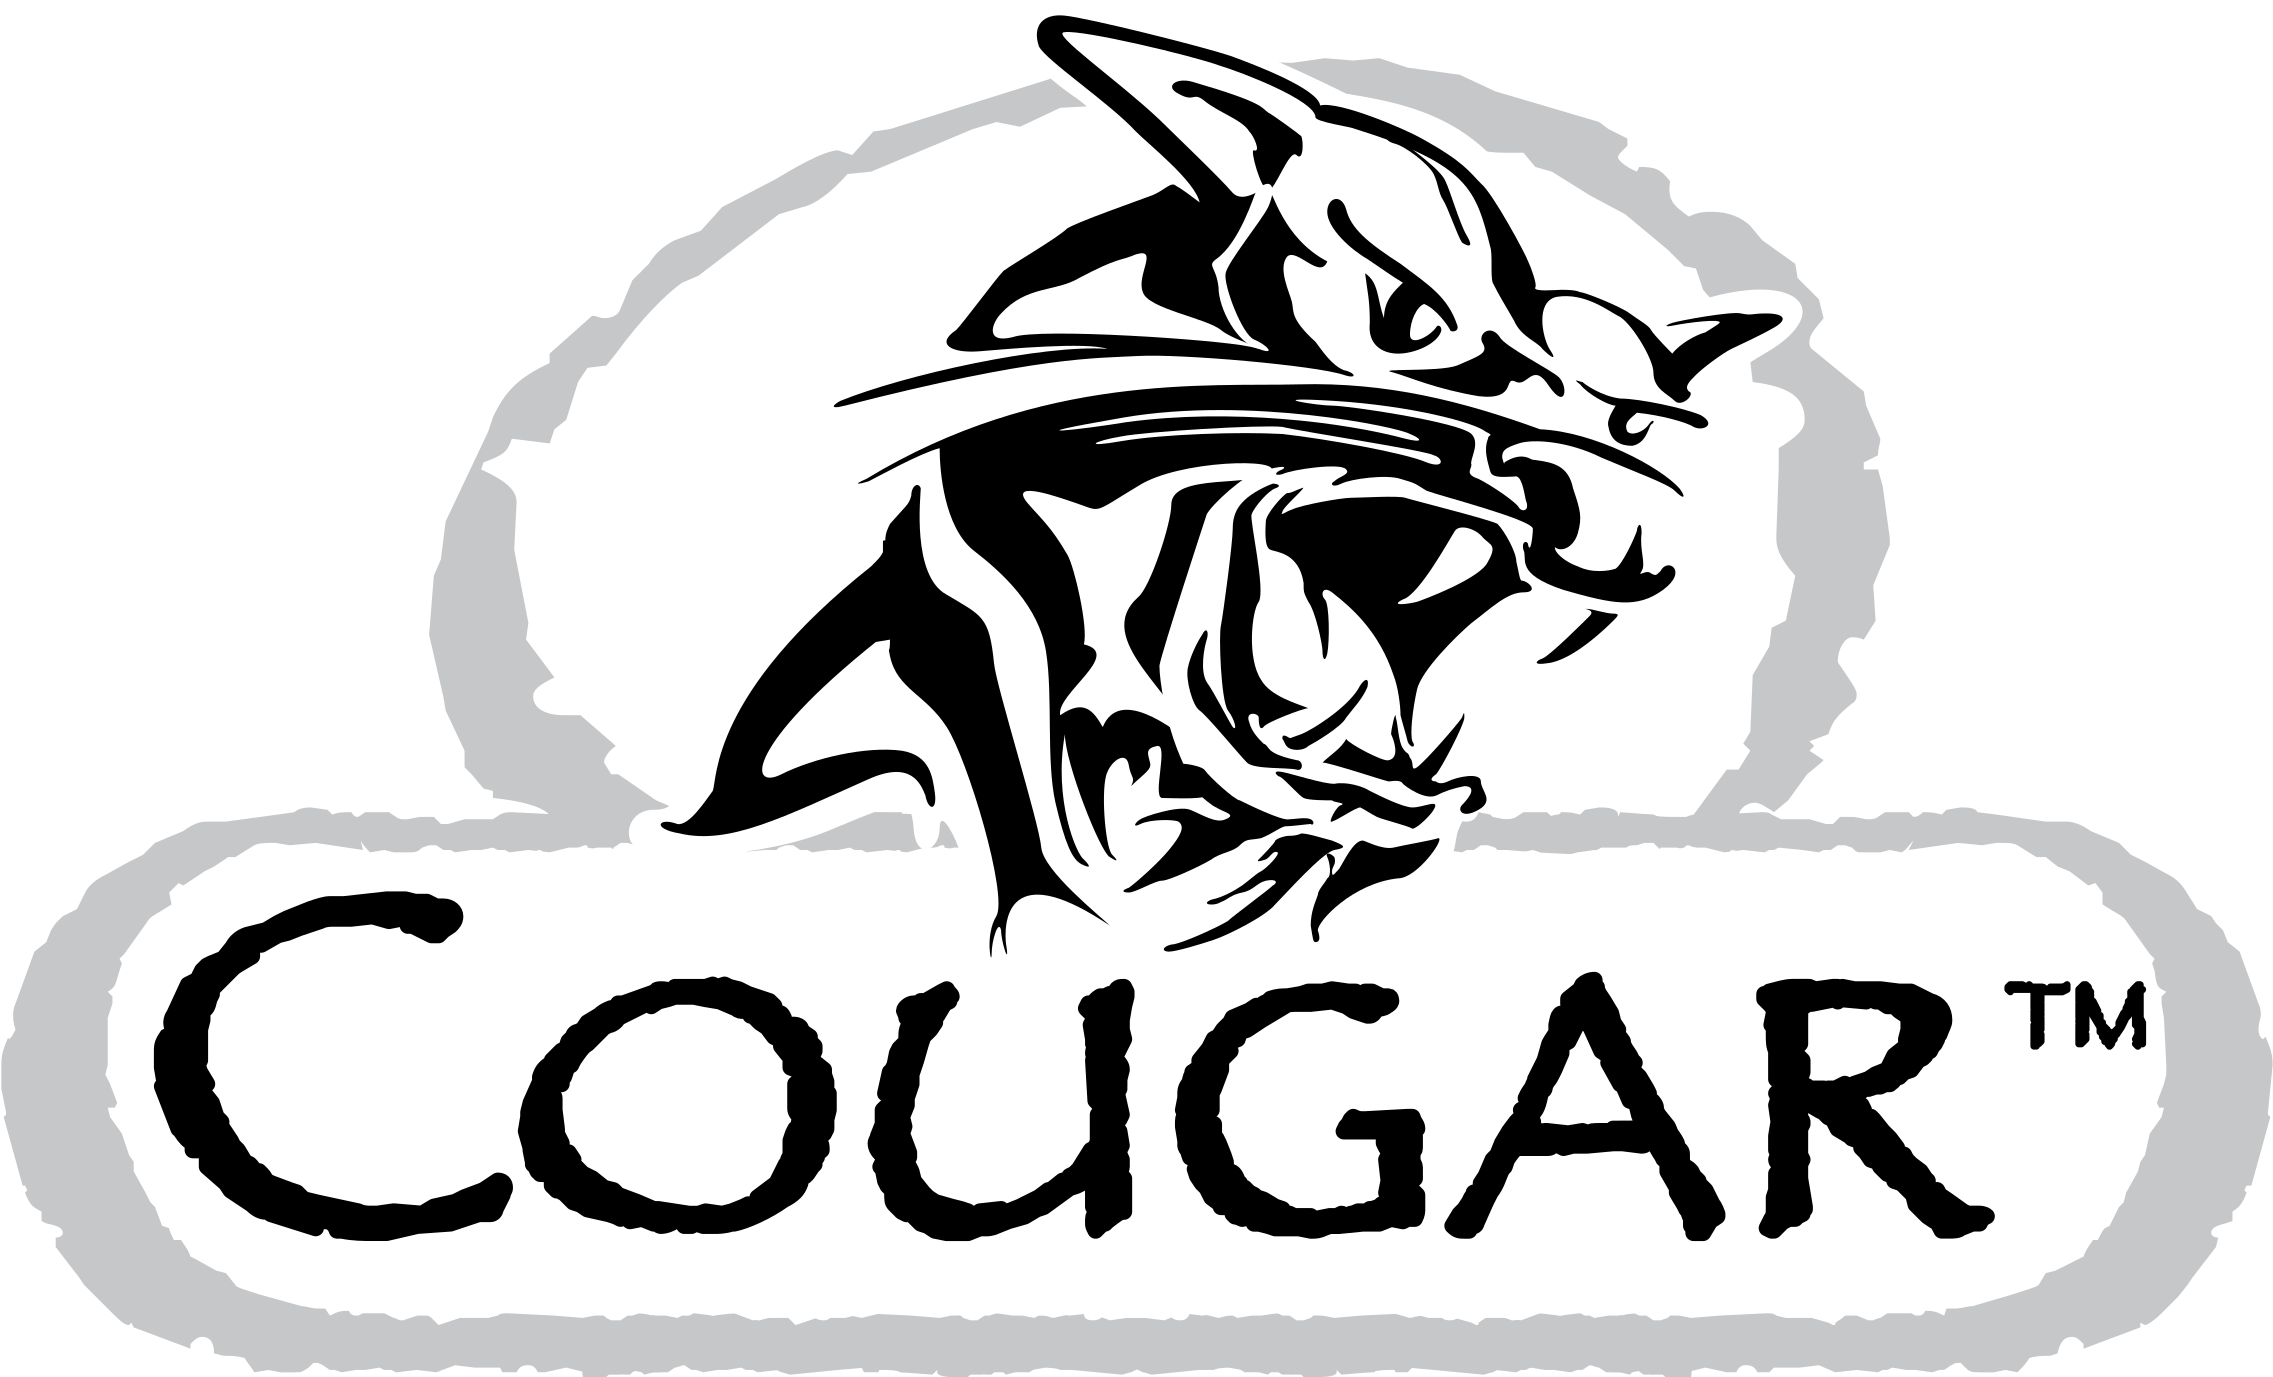 Cougar Logo Png Transparent Cougar Clipart Large Size Png Image